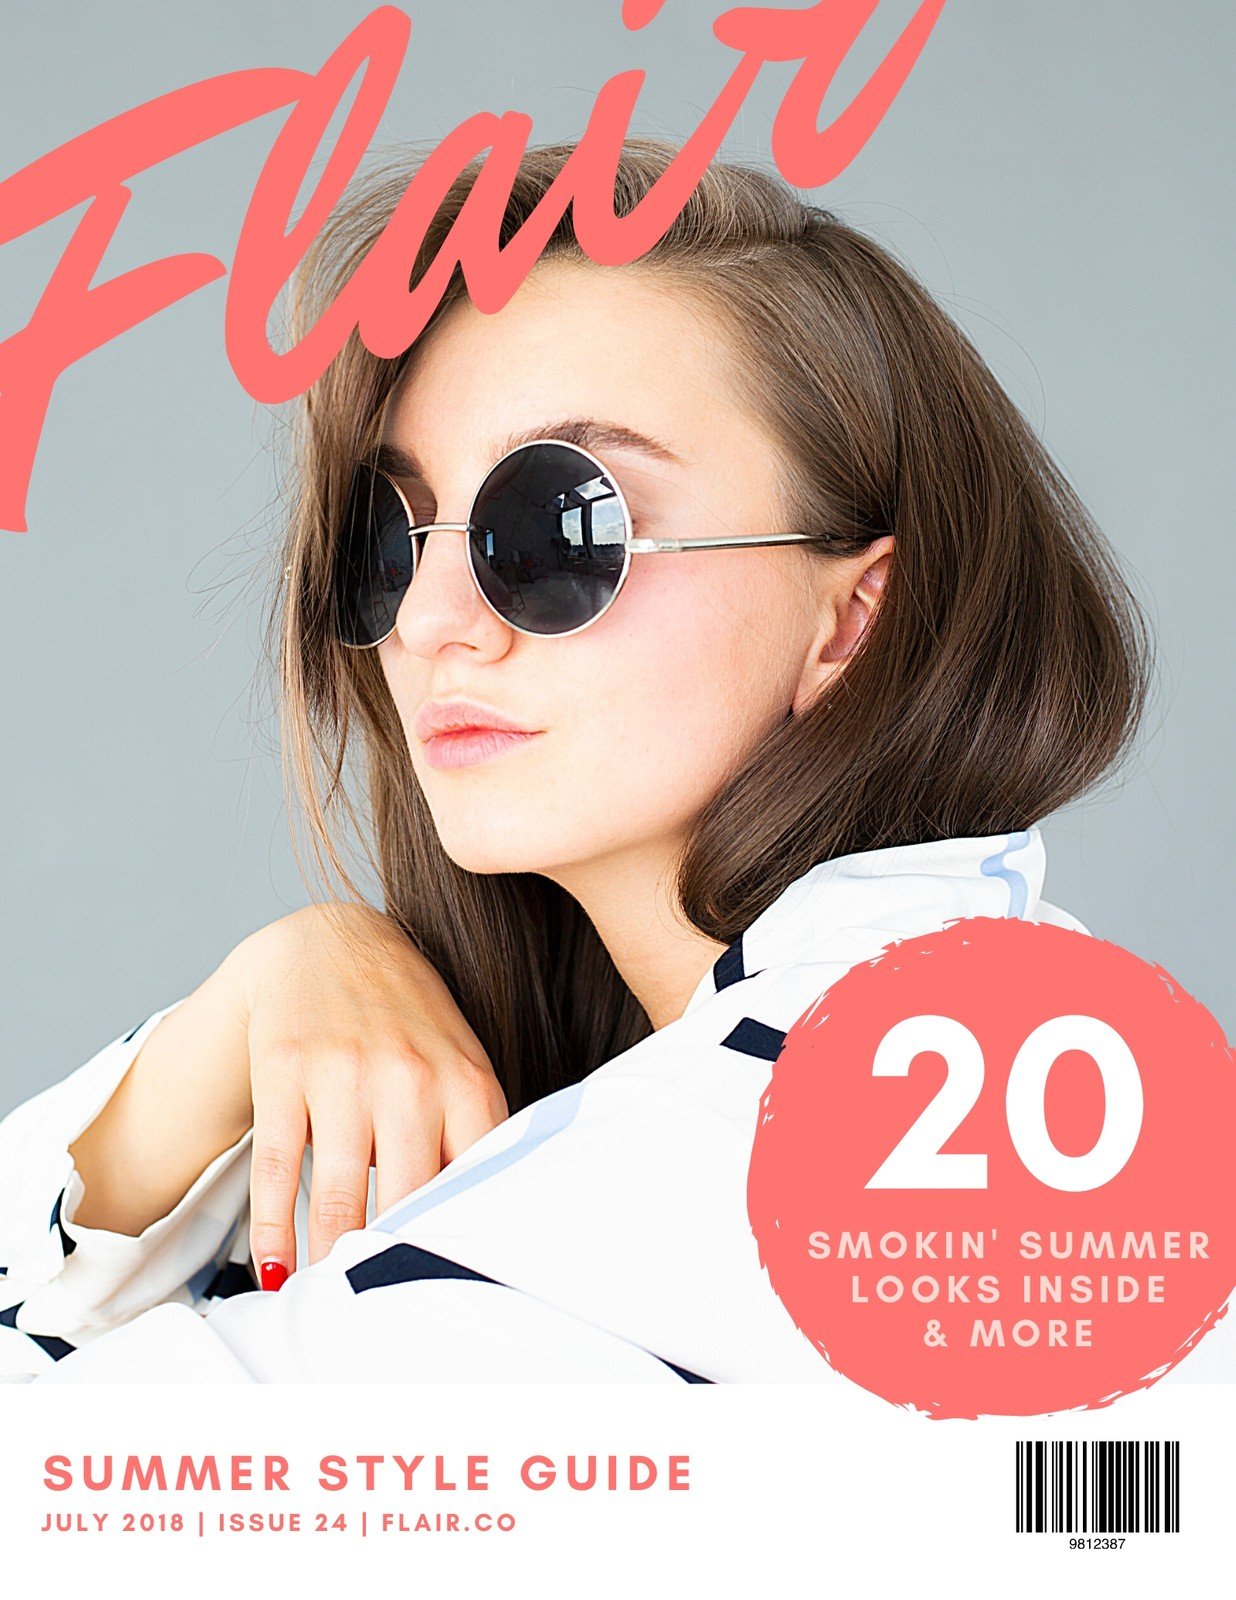 Free, printable, editable fashion magazine cover templates Canva